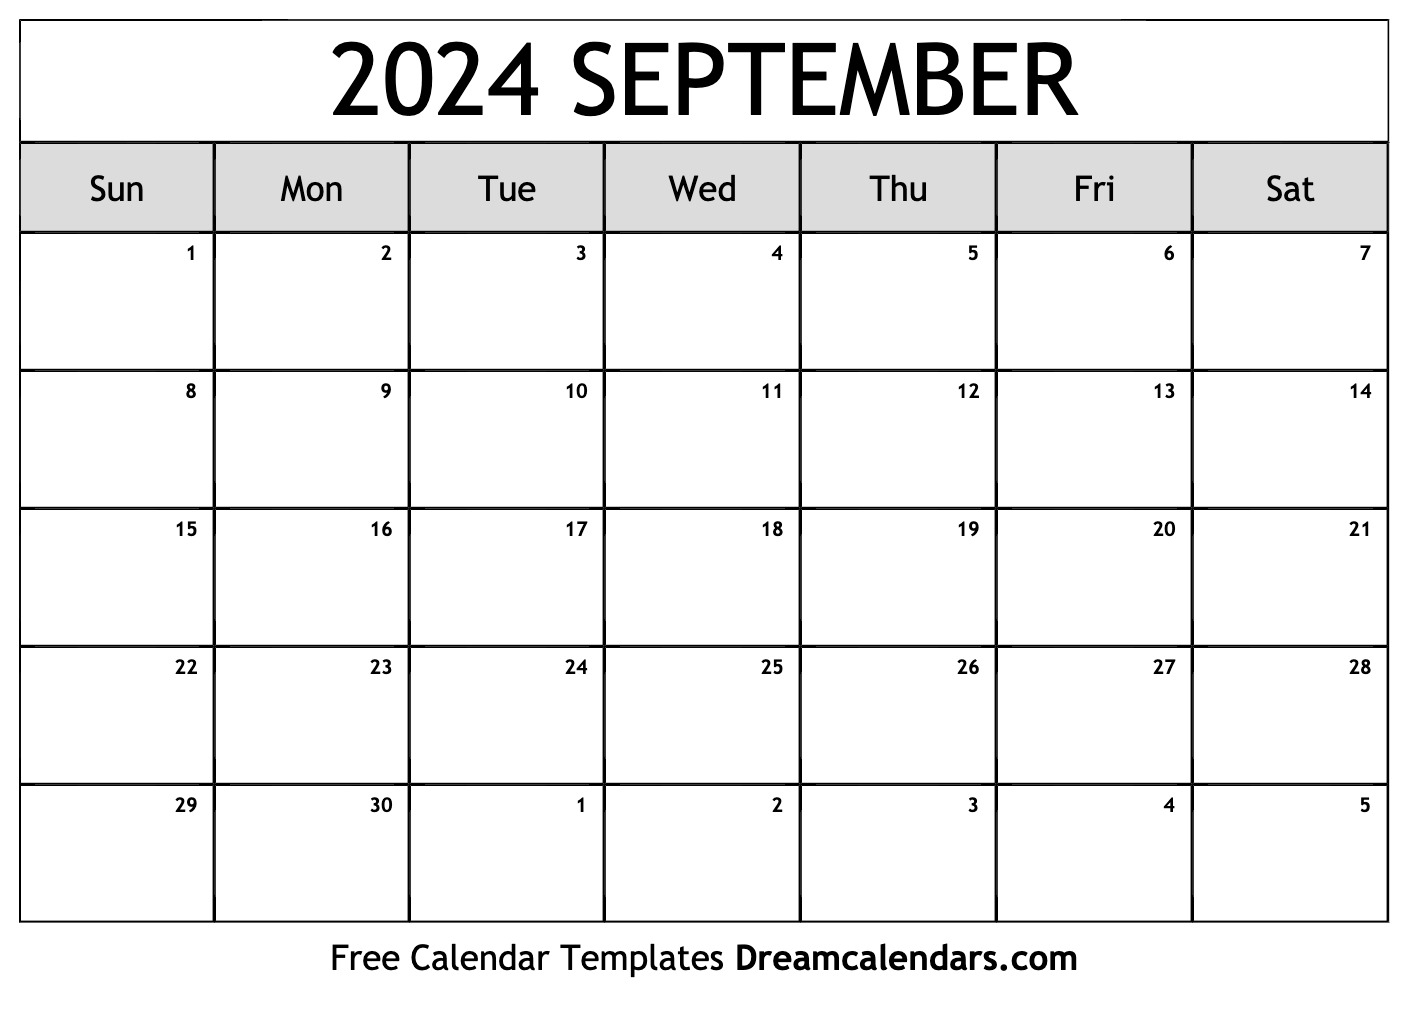 September 2024 Calendar | Free Blank Printable With Holidays for September 2024 Free Printable Calendar